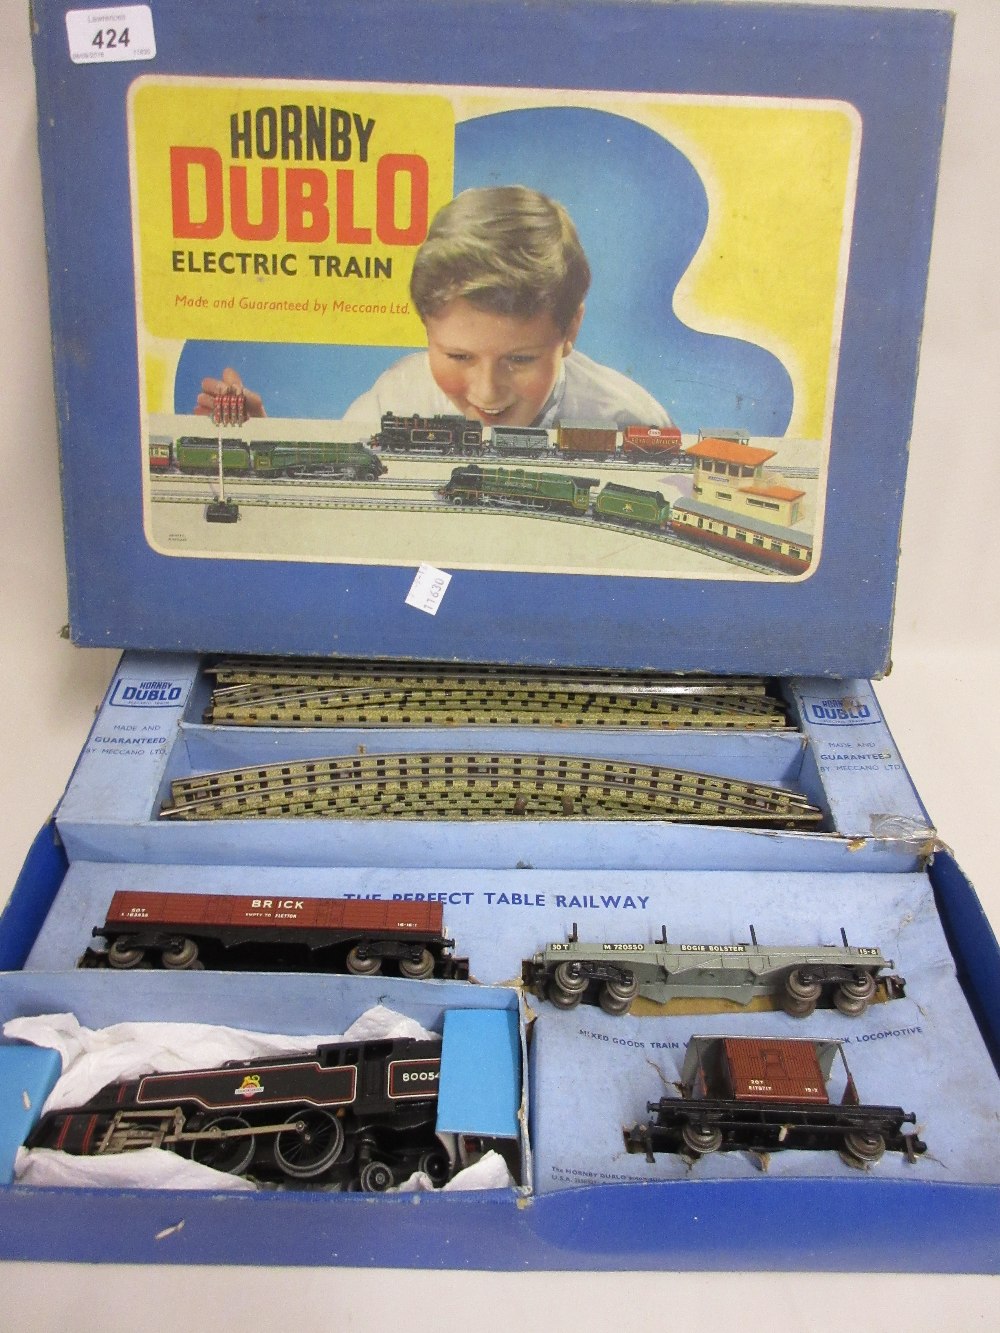 Hornby dublo electric train set in original fitted box